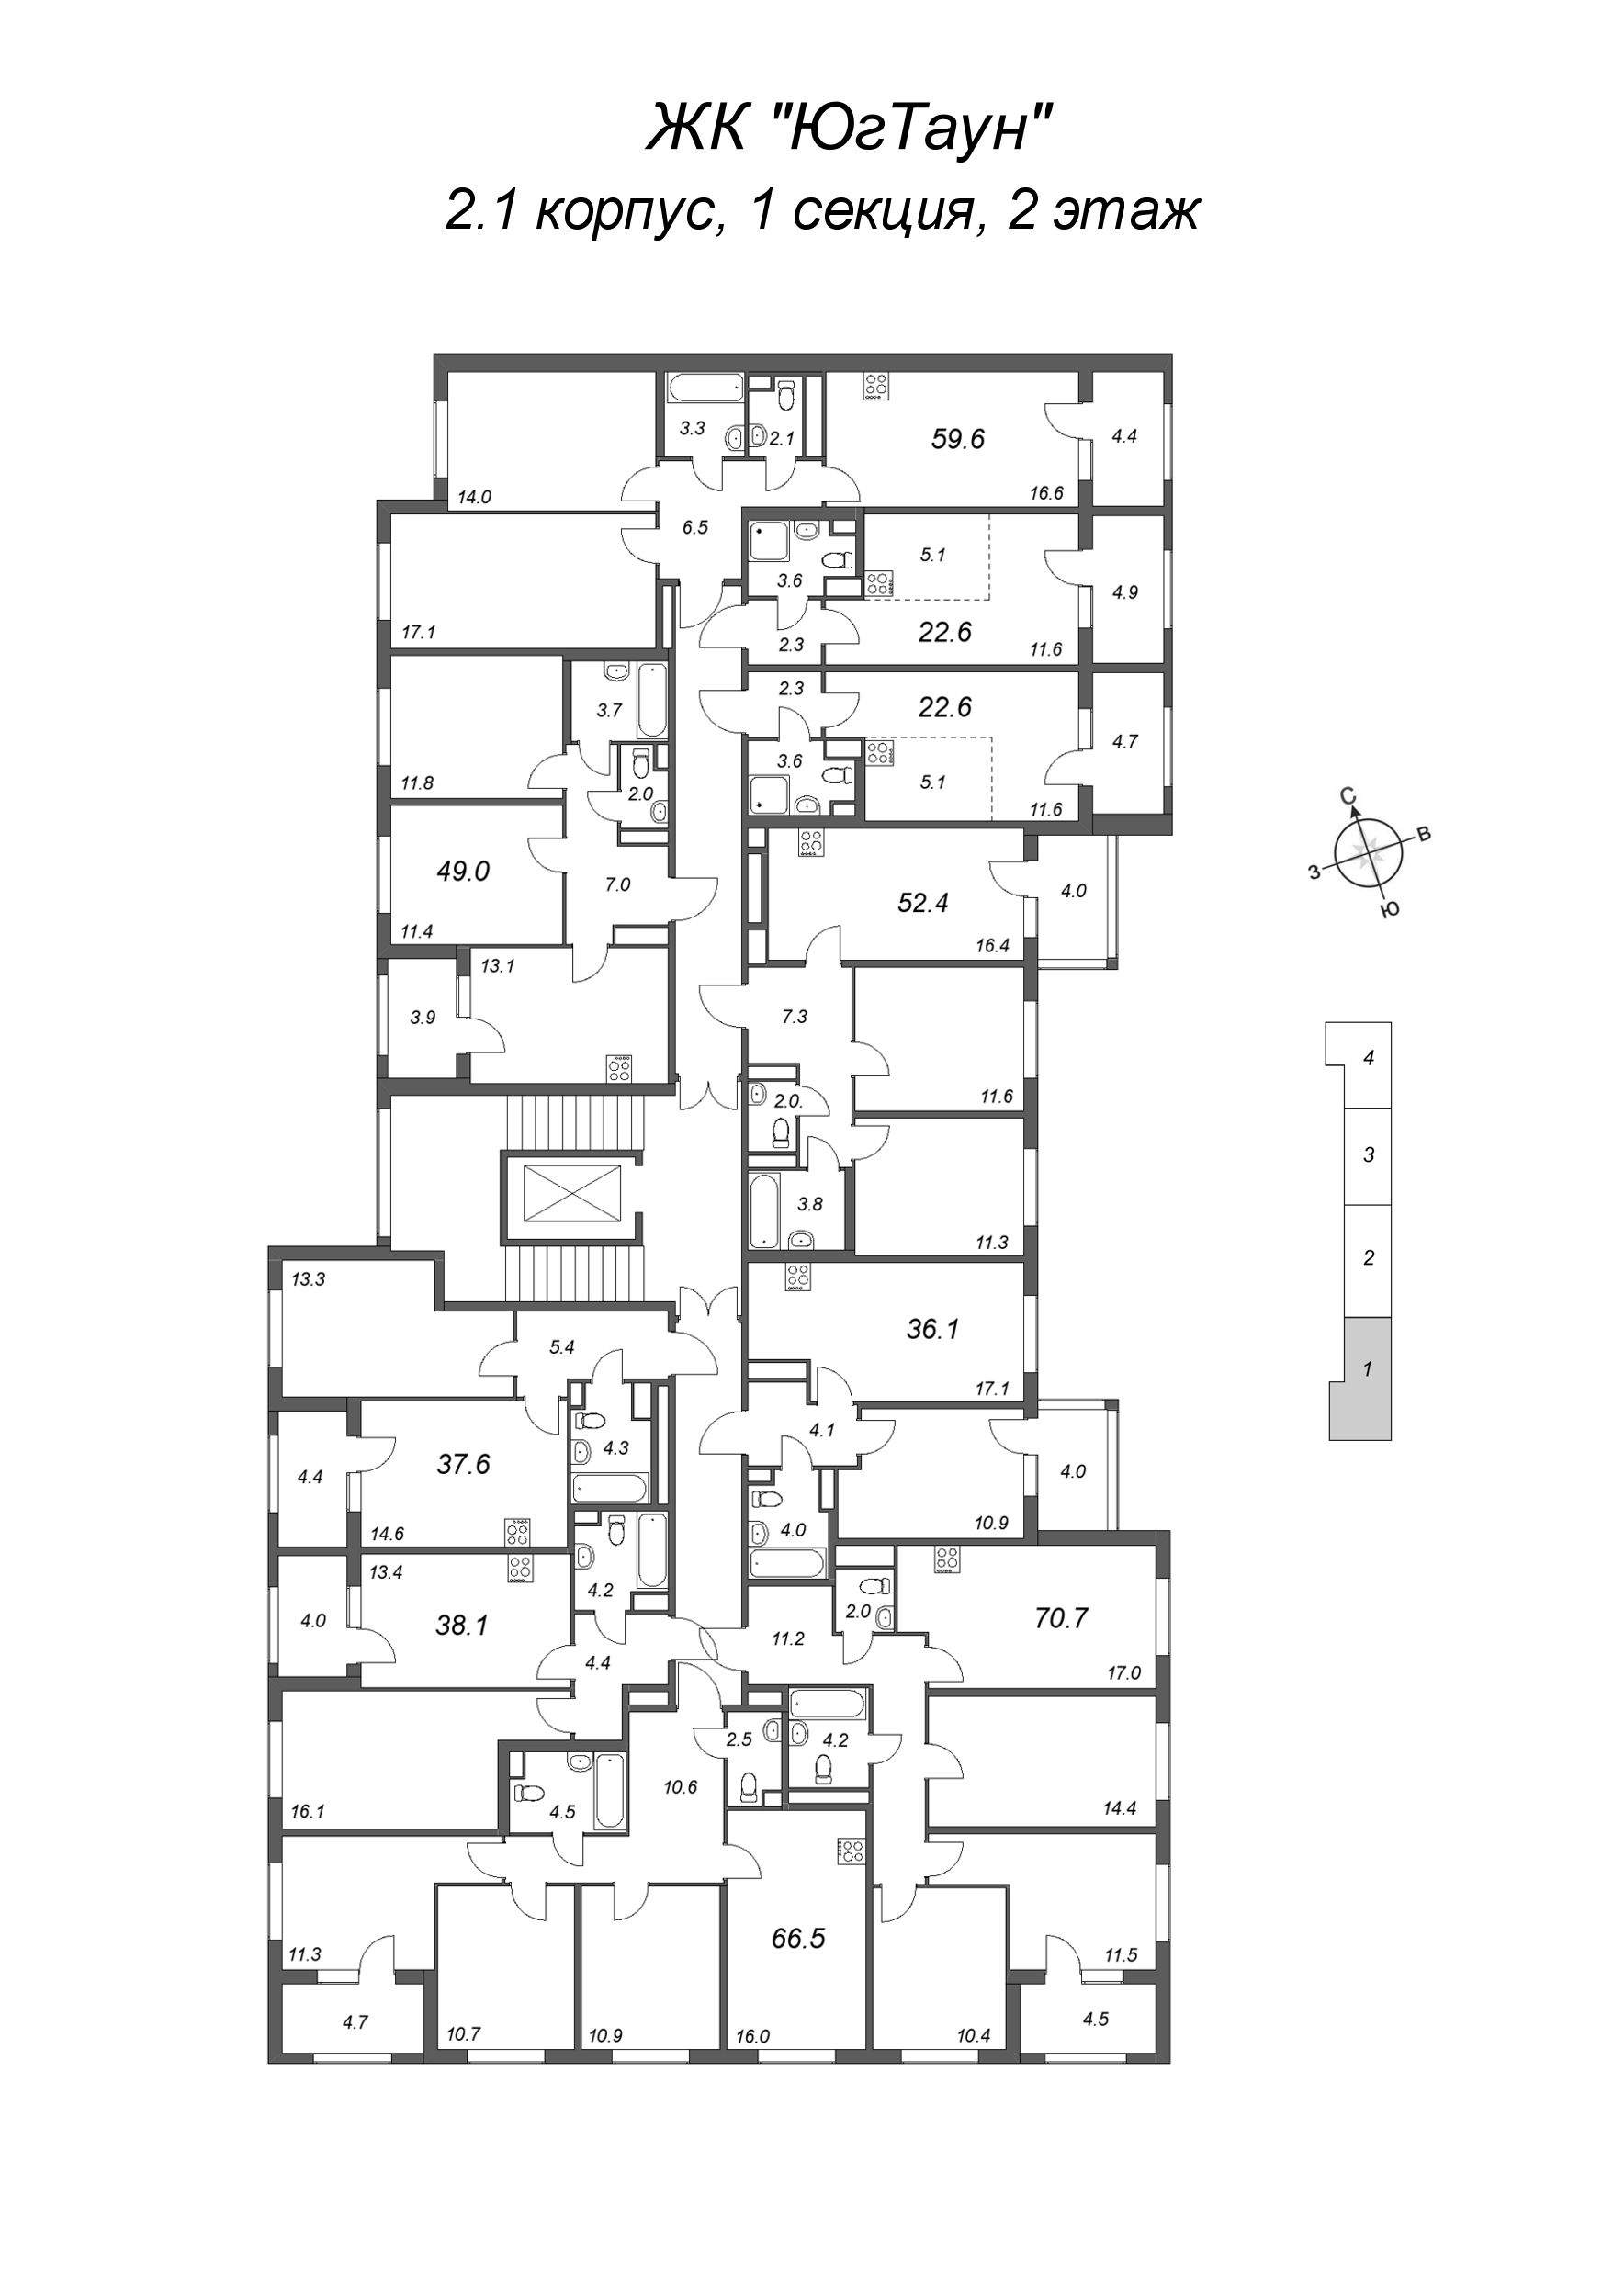 4-комнатная (Евро) квартира, 66.5 м² - планировка этажа